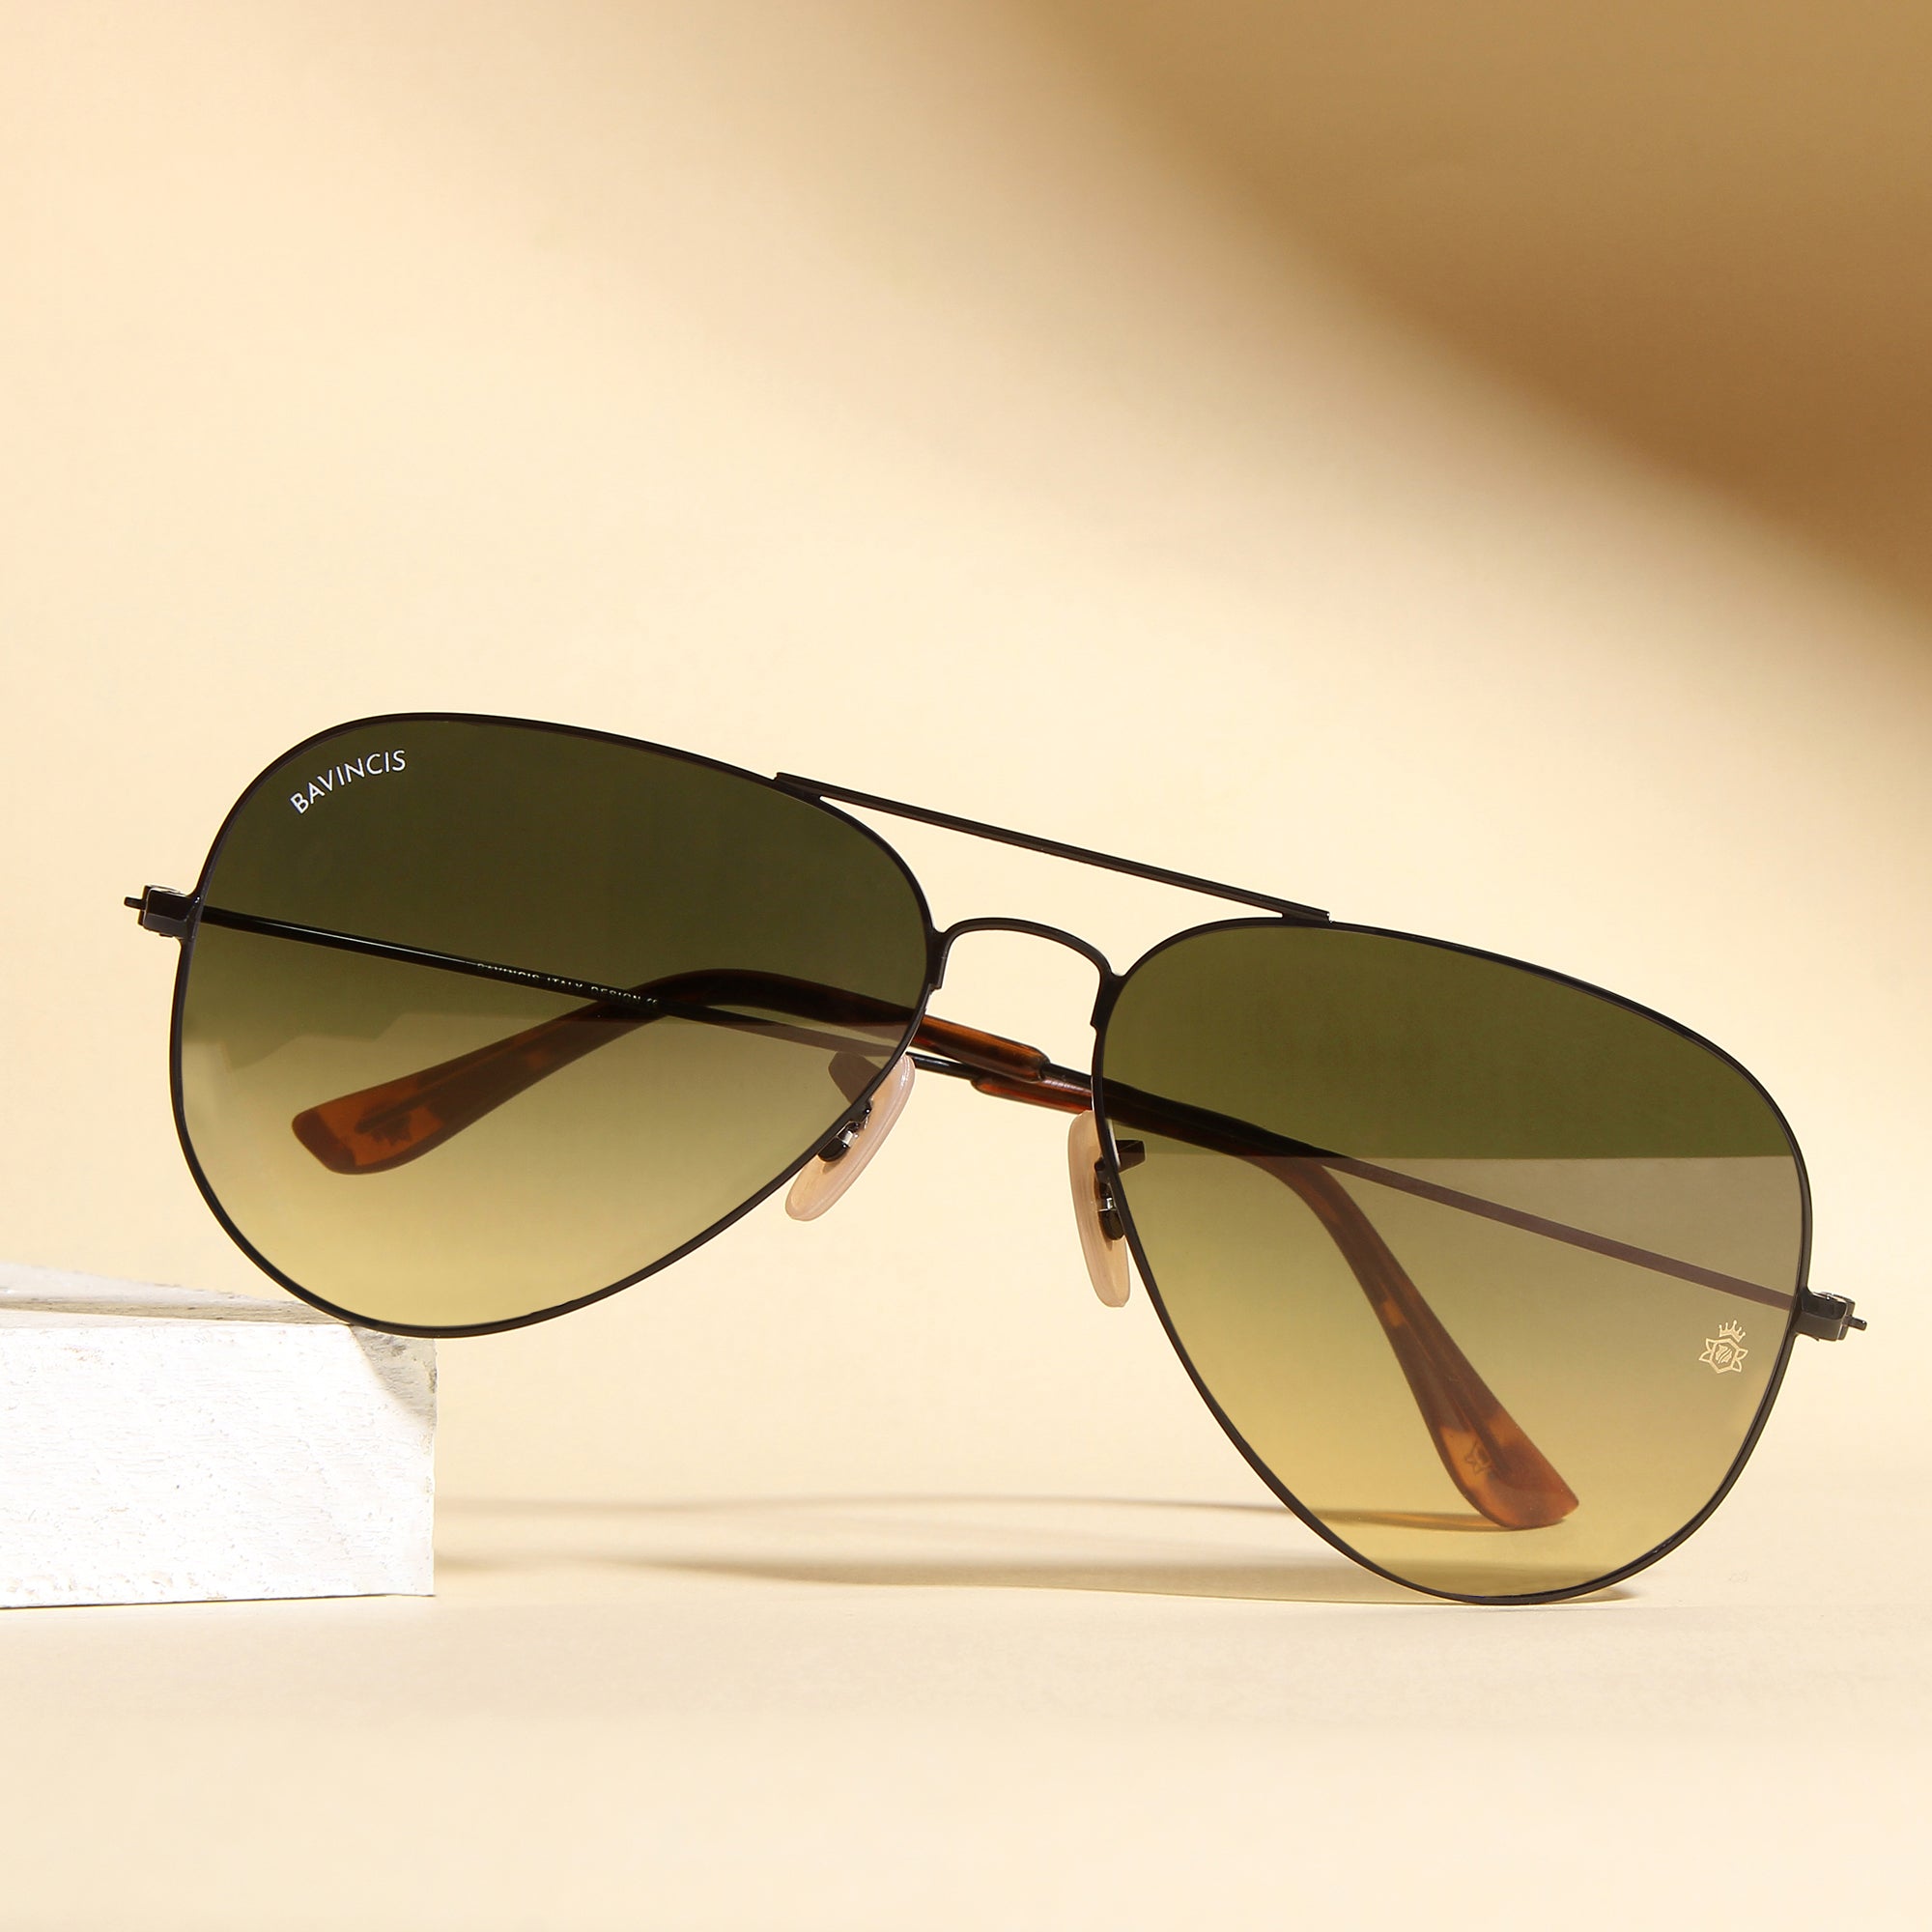 Bavincis | Stylish sunglasses | Unisex sunglasses